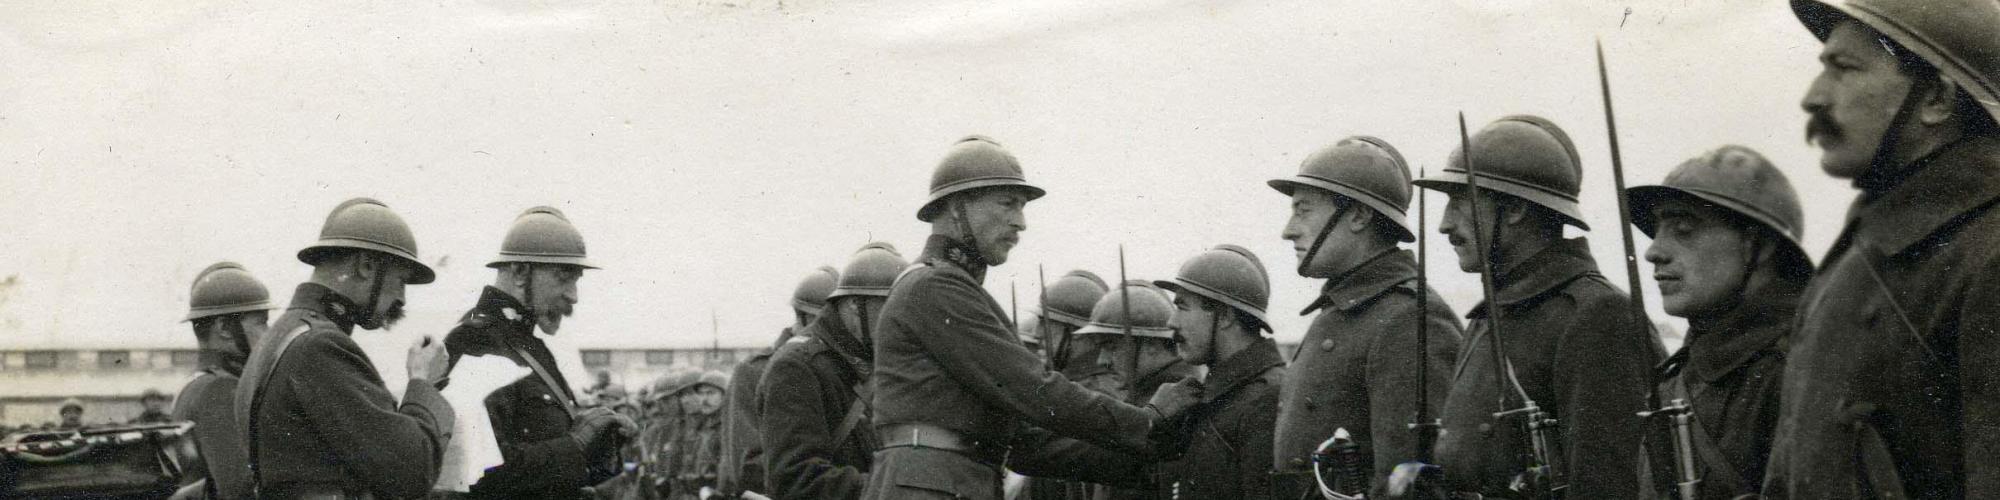 Belgian soldiers First World War